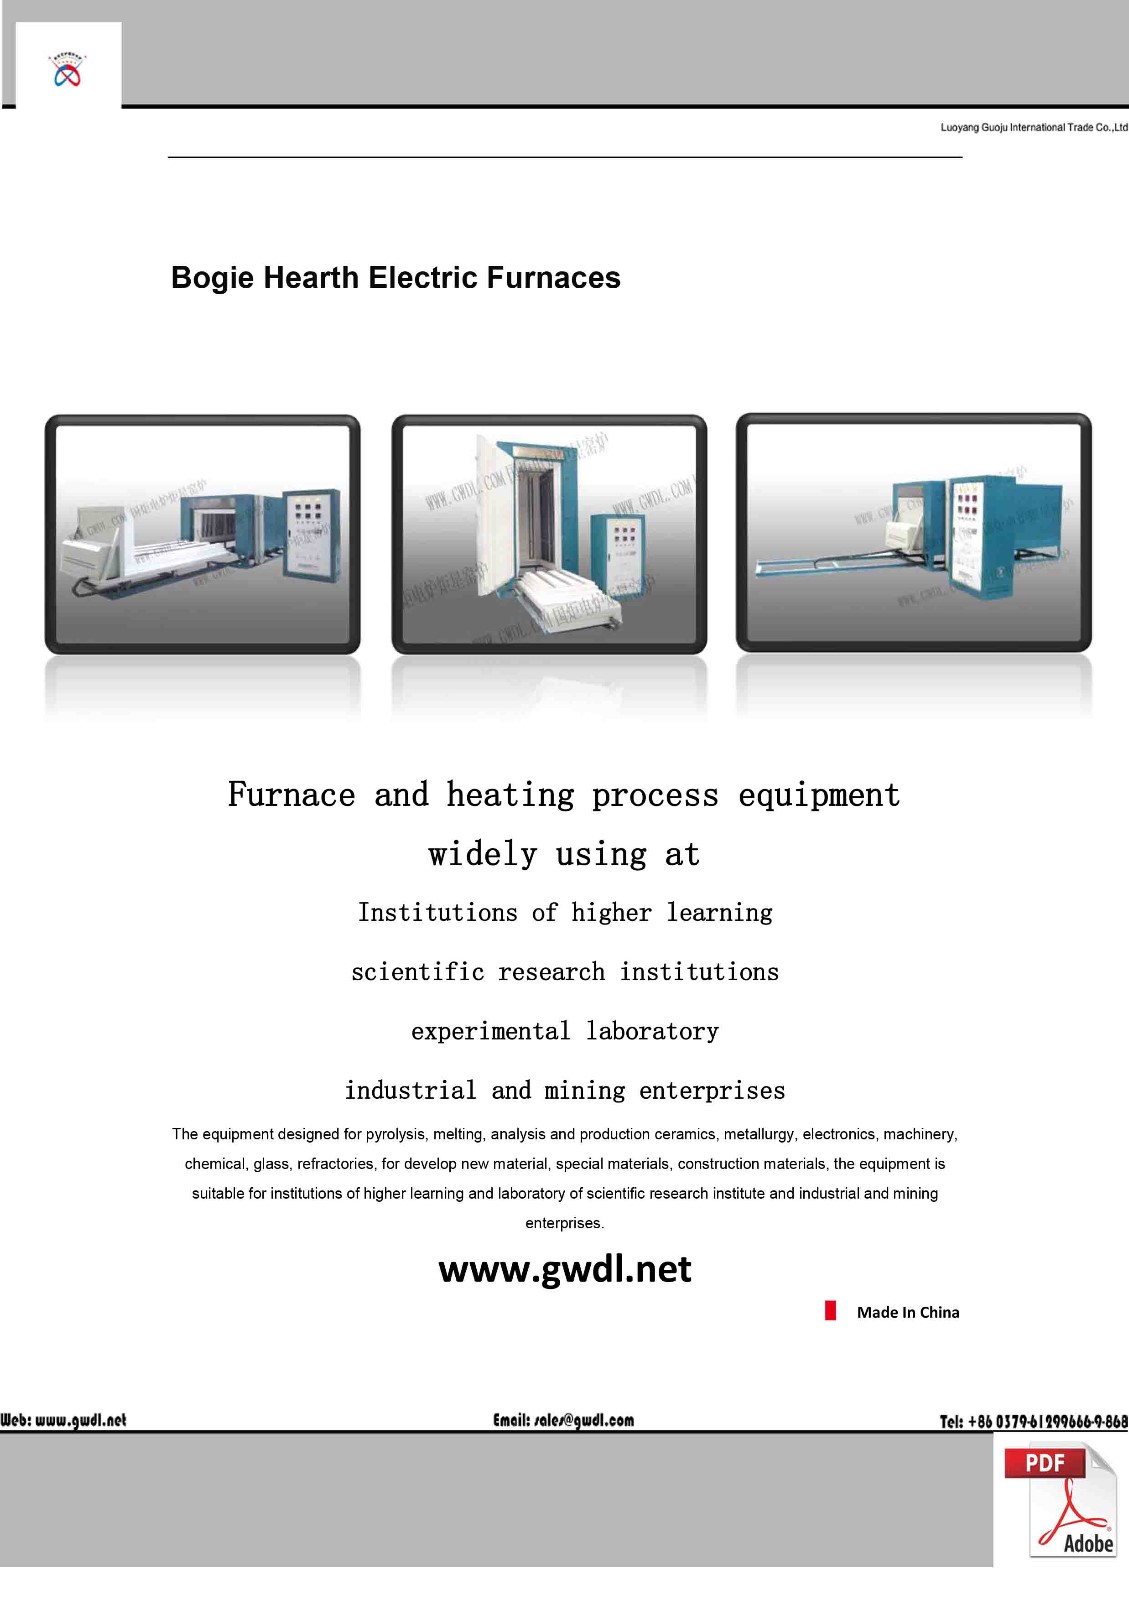 High Temperature Bogie Hearth Electric Furnace(GWL-STCY)